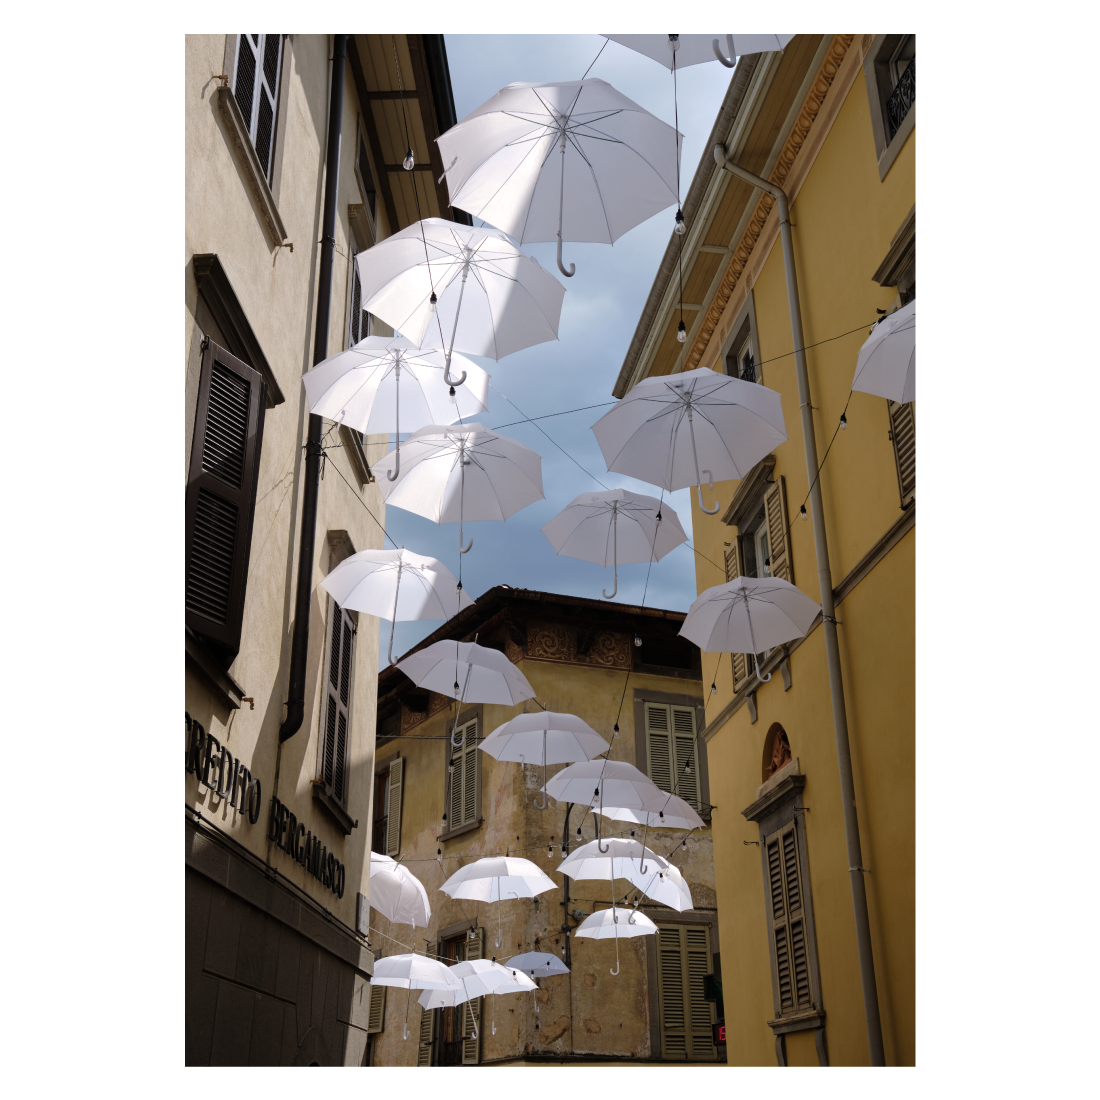 Italien plakat med hængende paraplyer i byen Clusone